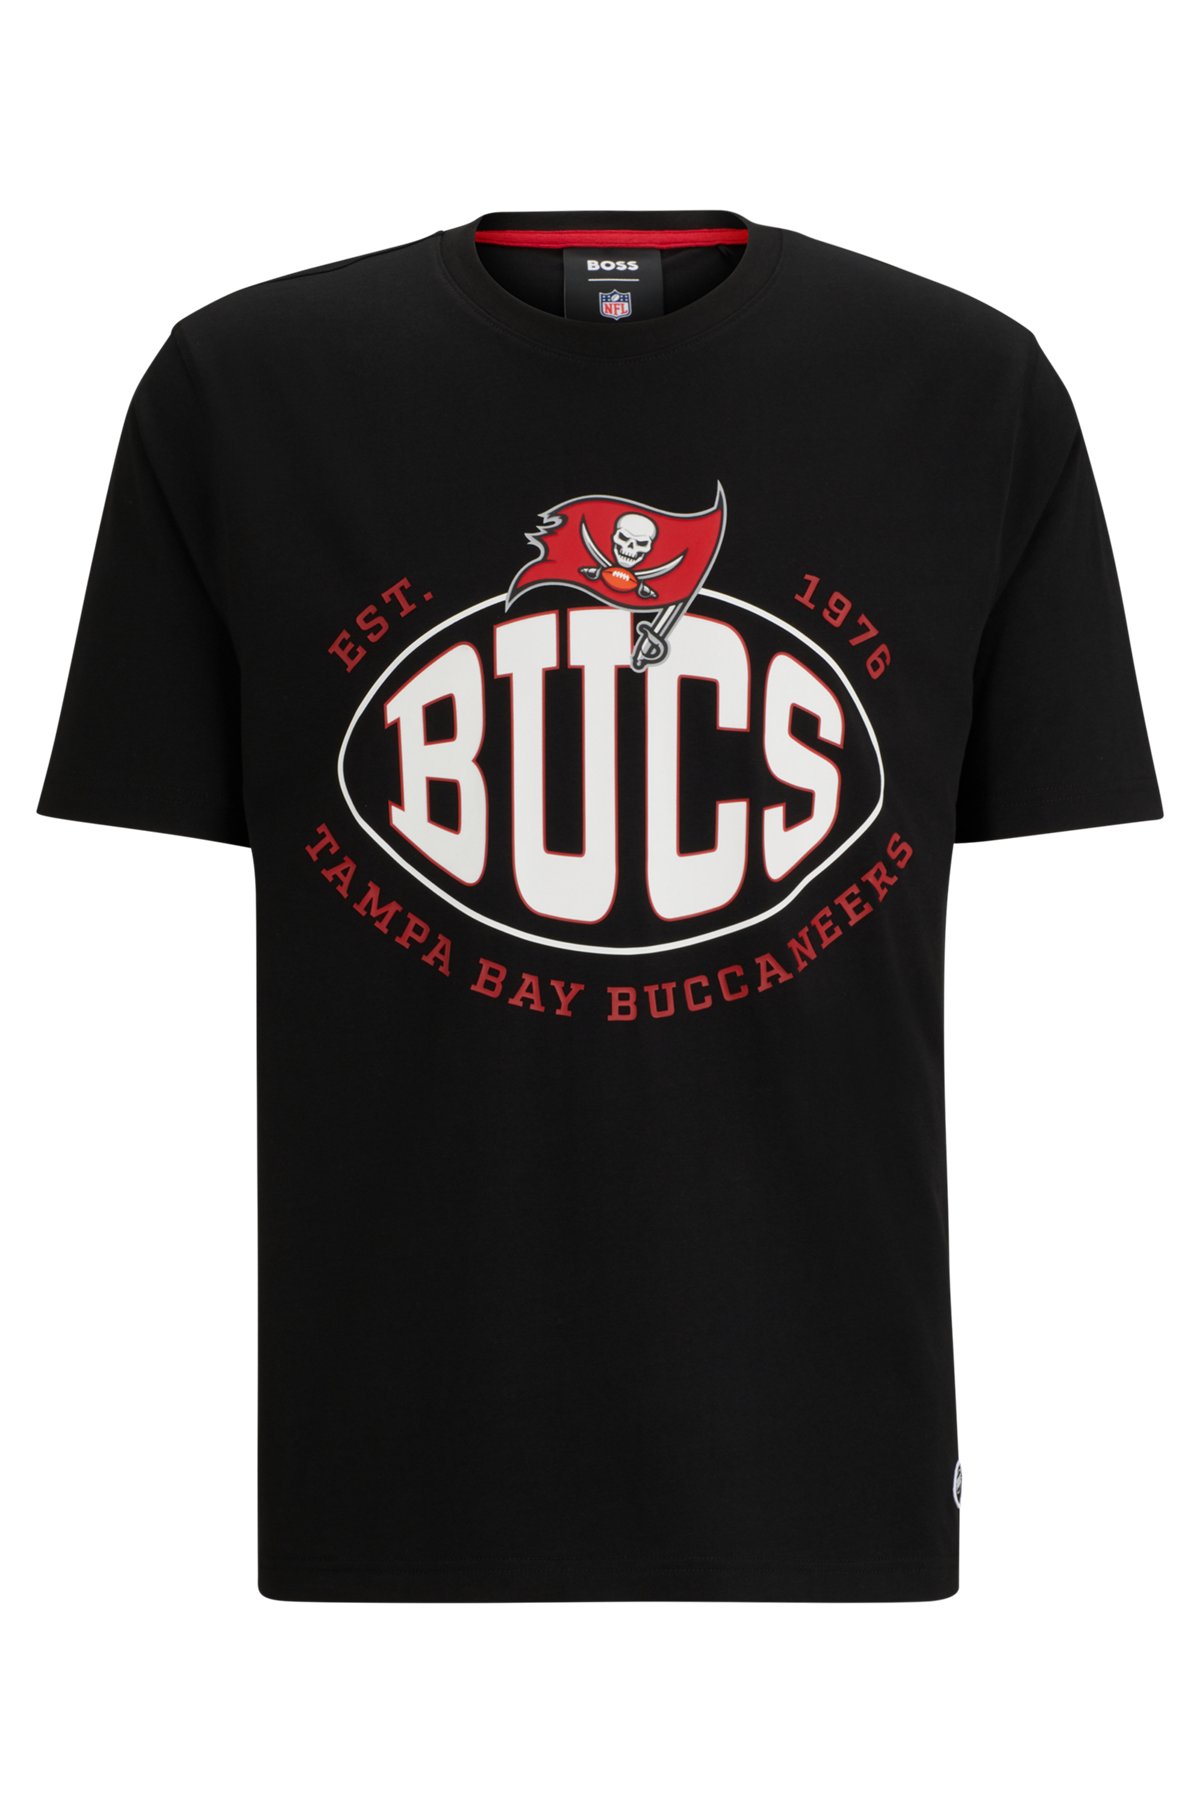  BOSS x NFL stretch-cotton T-shirt with collaborative branding, Bucs